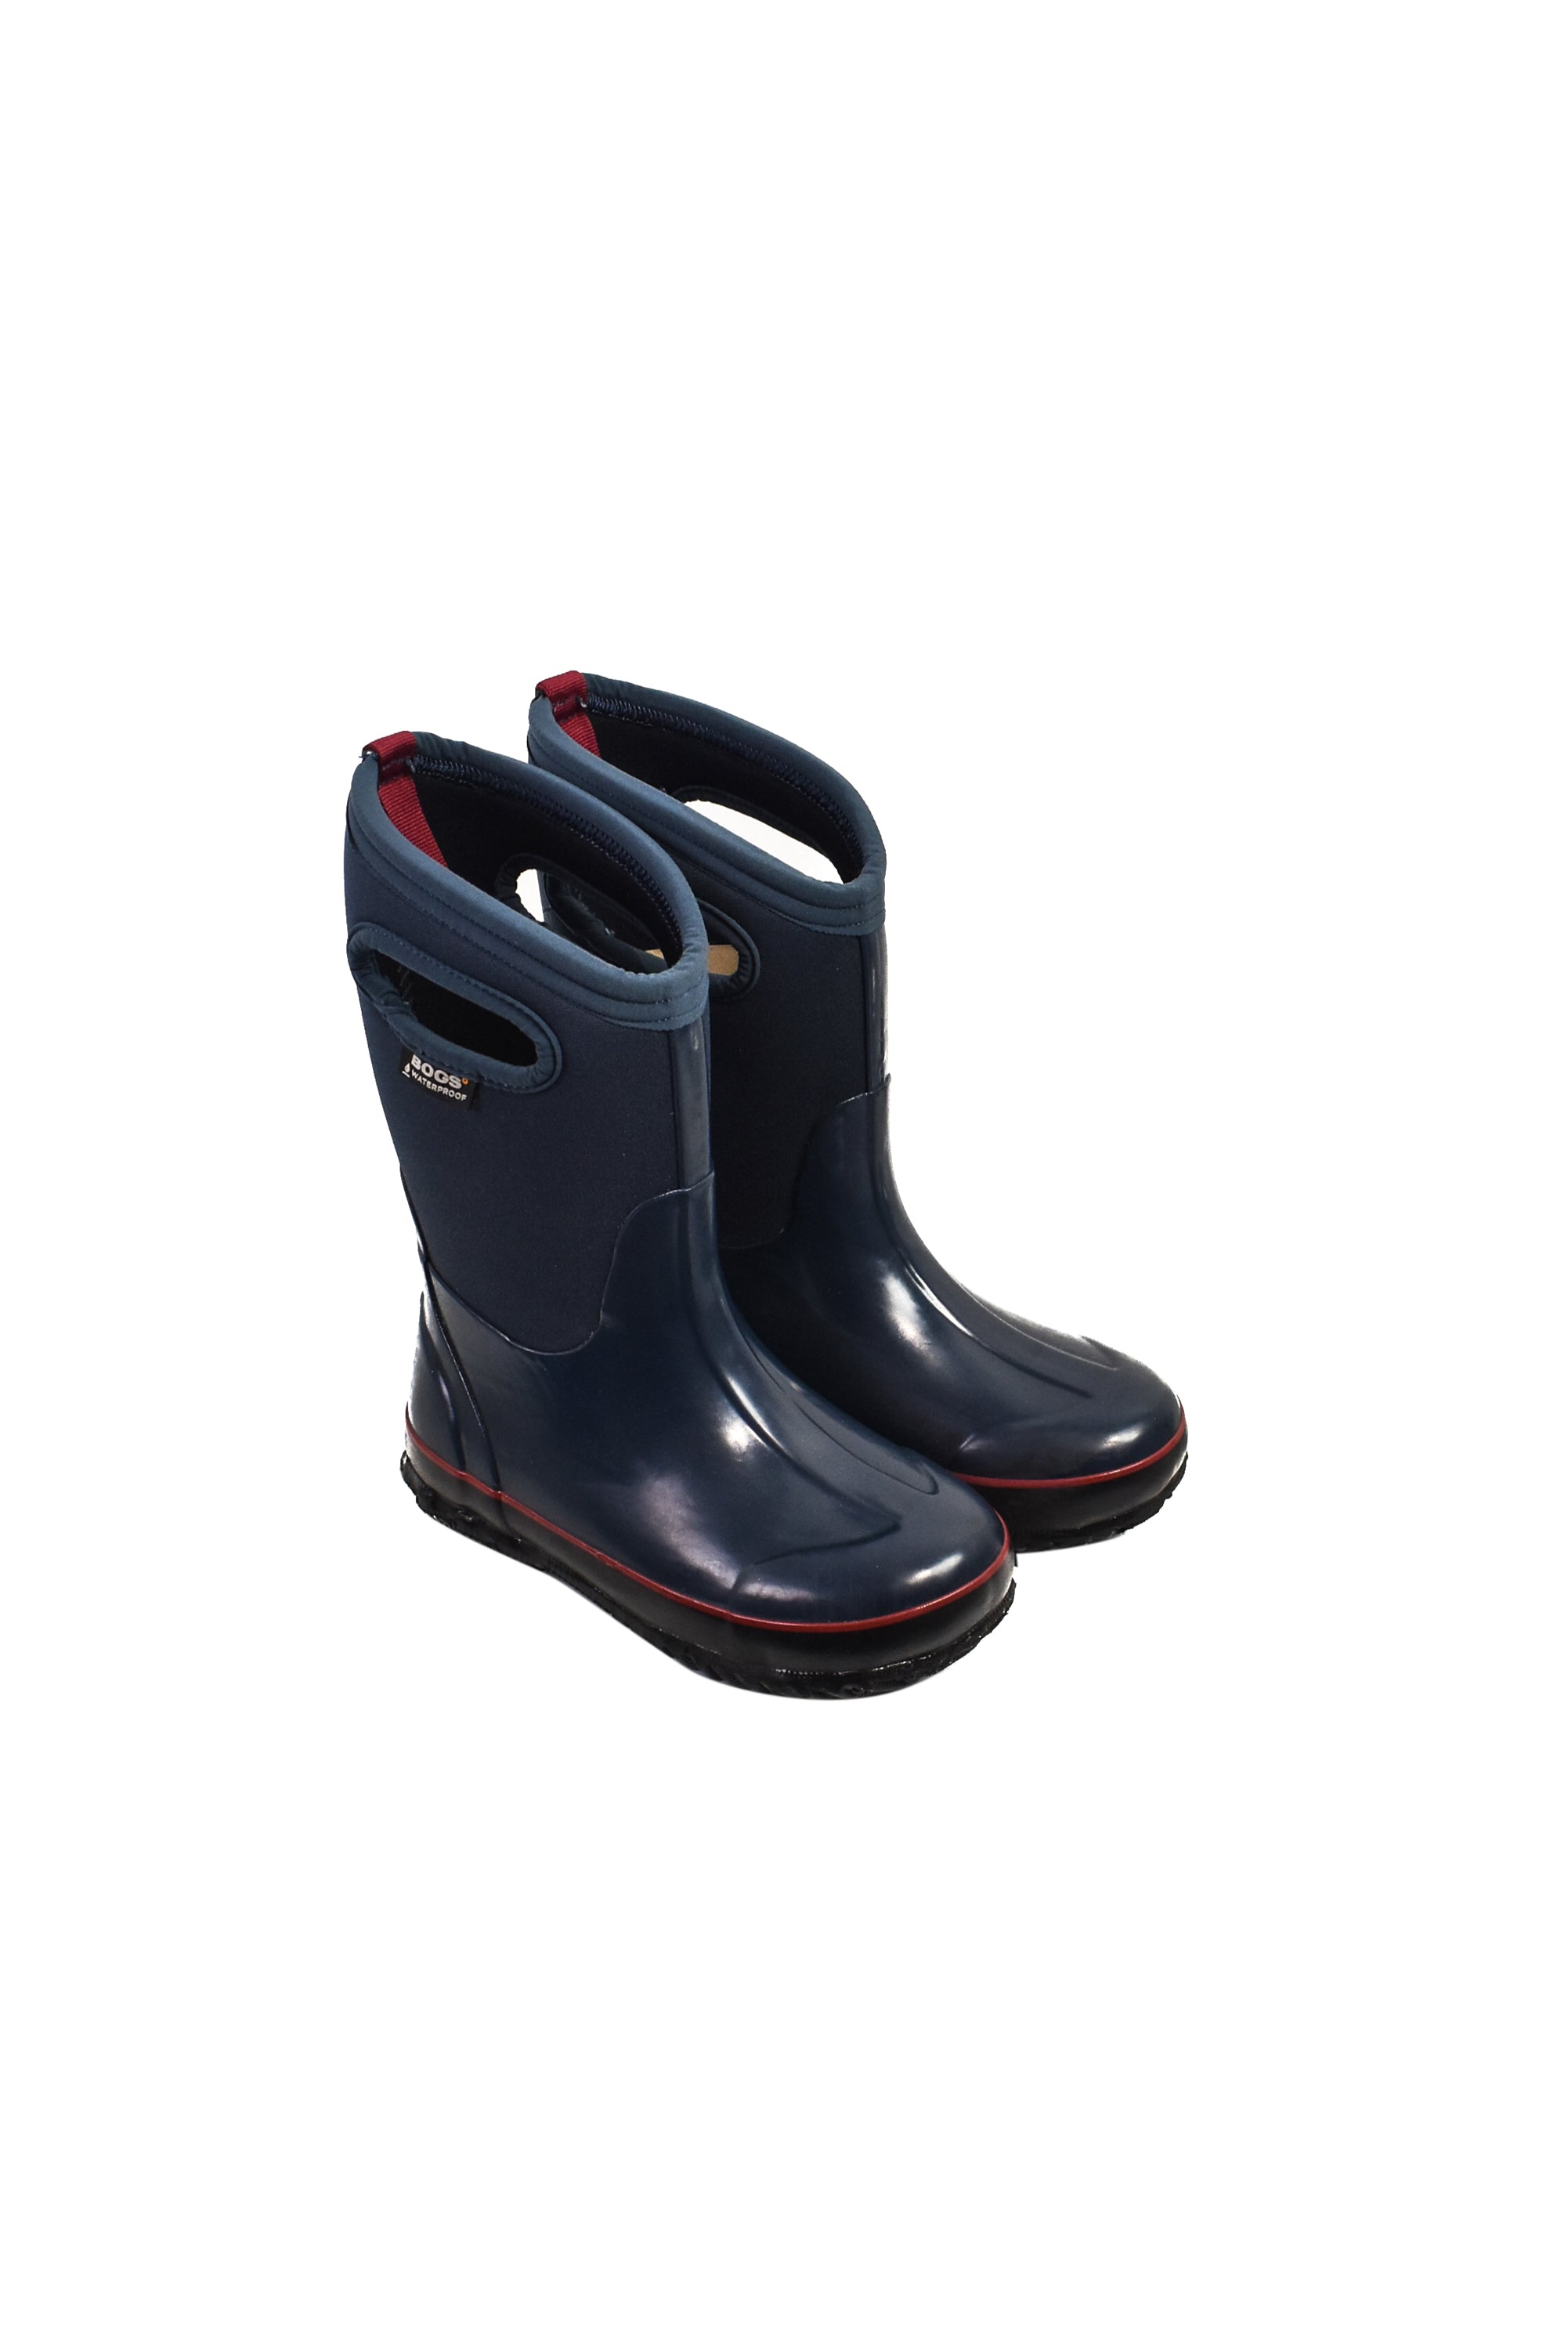 bogs boys rain boots